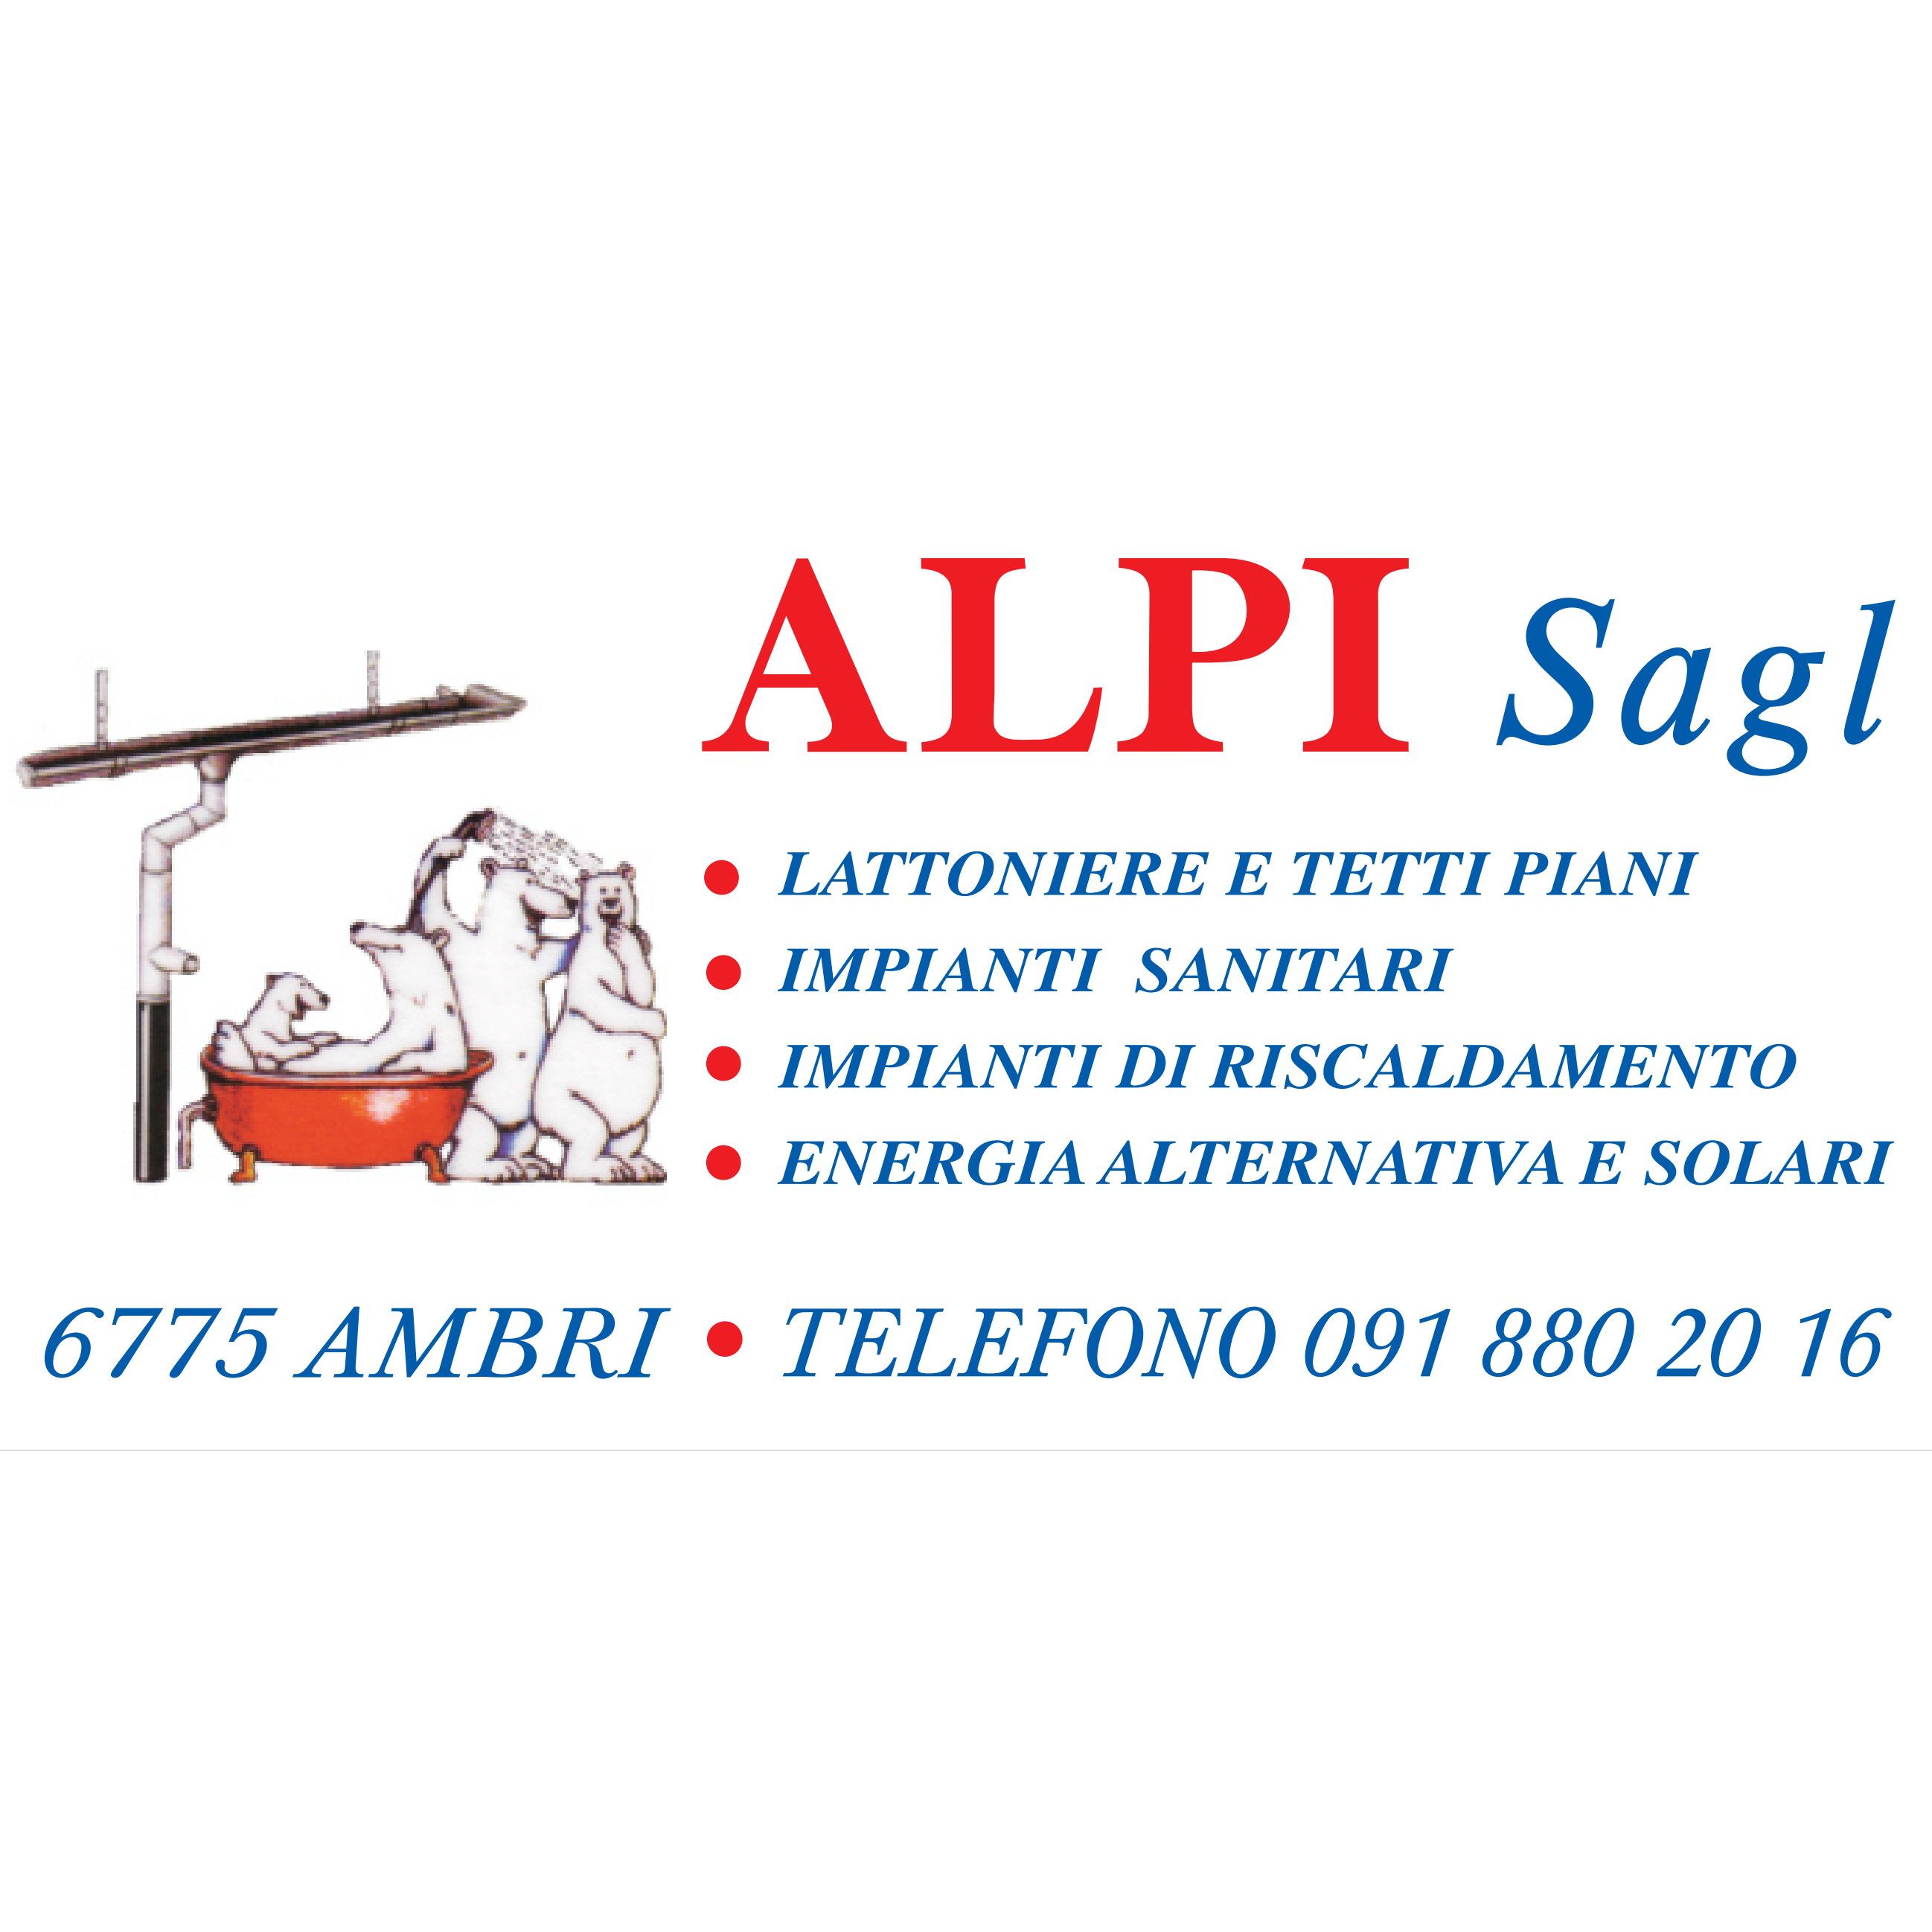 Idro-termo-sanitari ALPI Sagl Logo